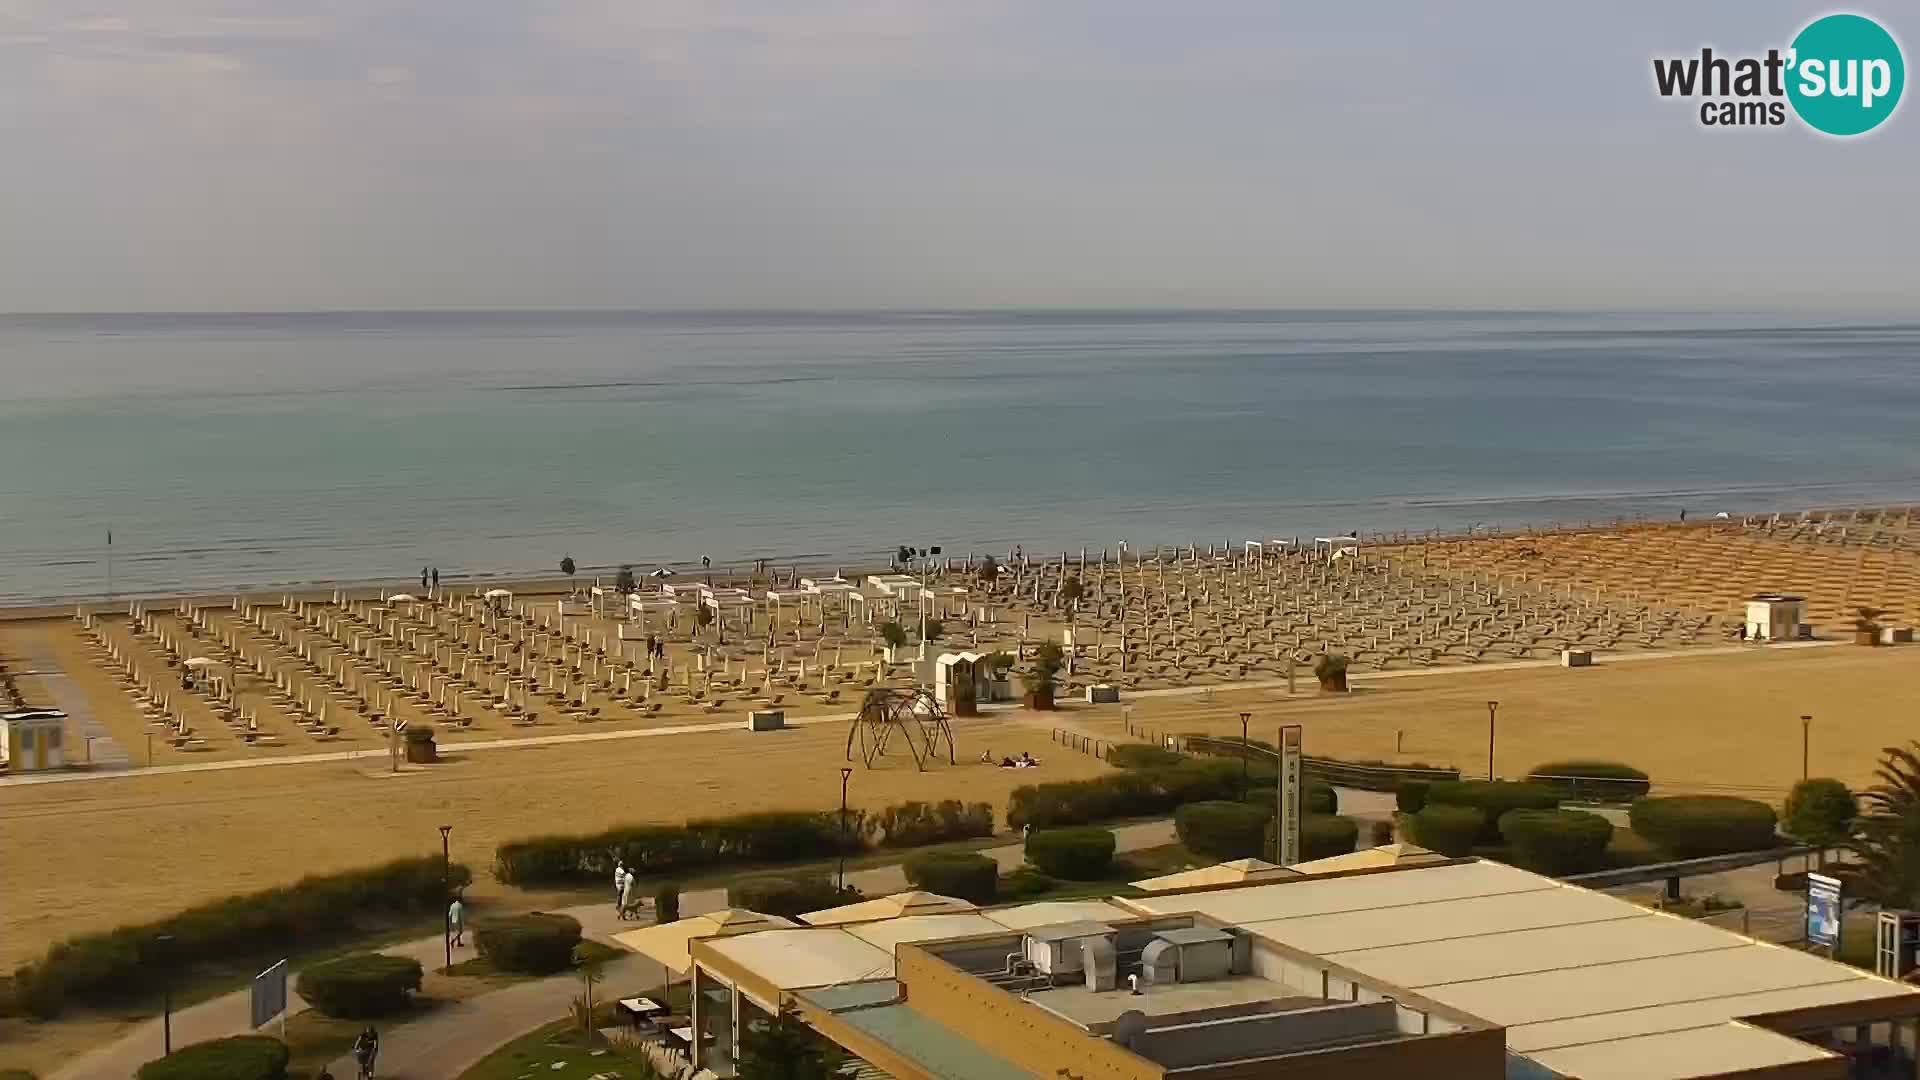 La camera en vivo de la playa de Bibione – Italia